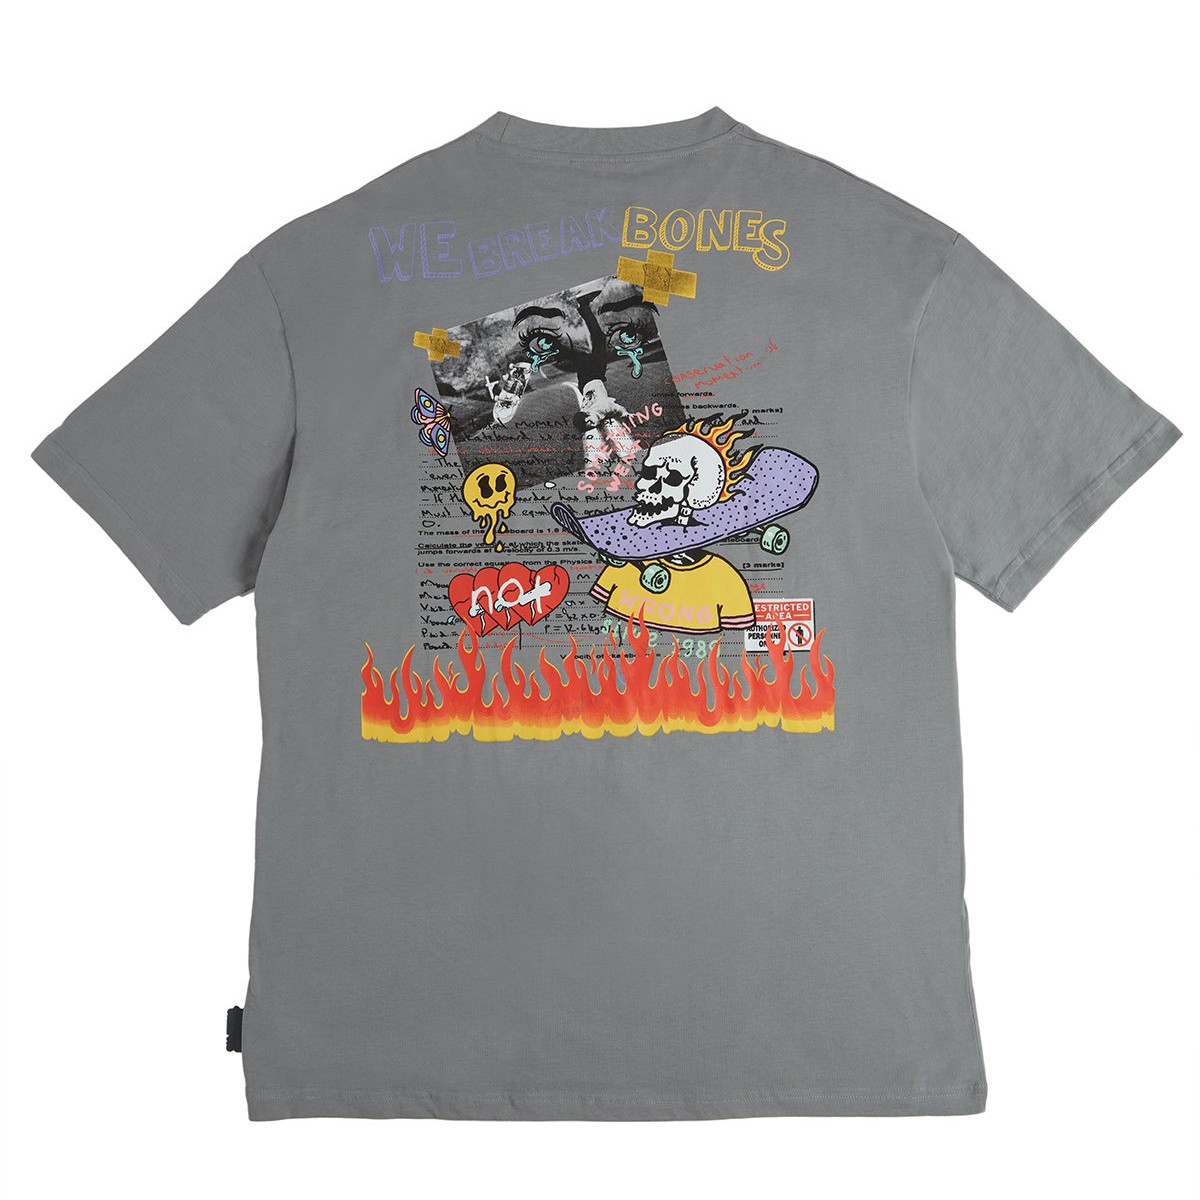 Ghetto Off Limits Whe Break Bones Grey Oversize T-Shirt TS-20006